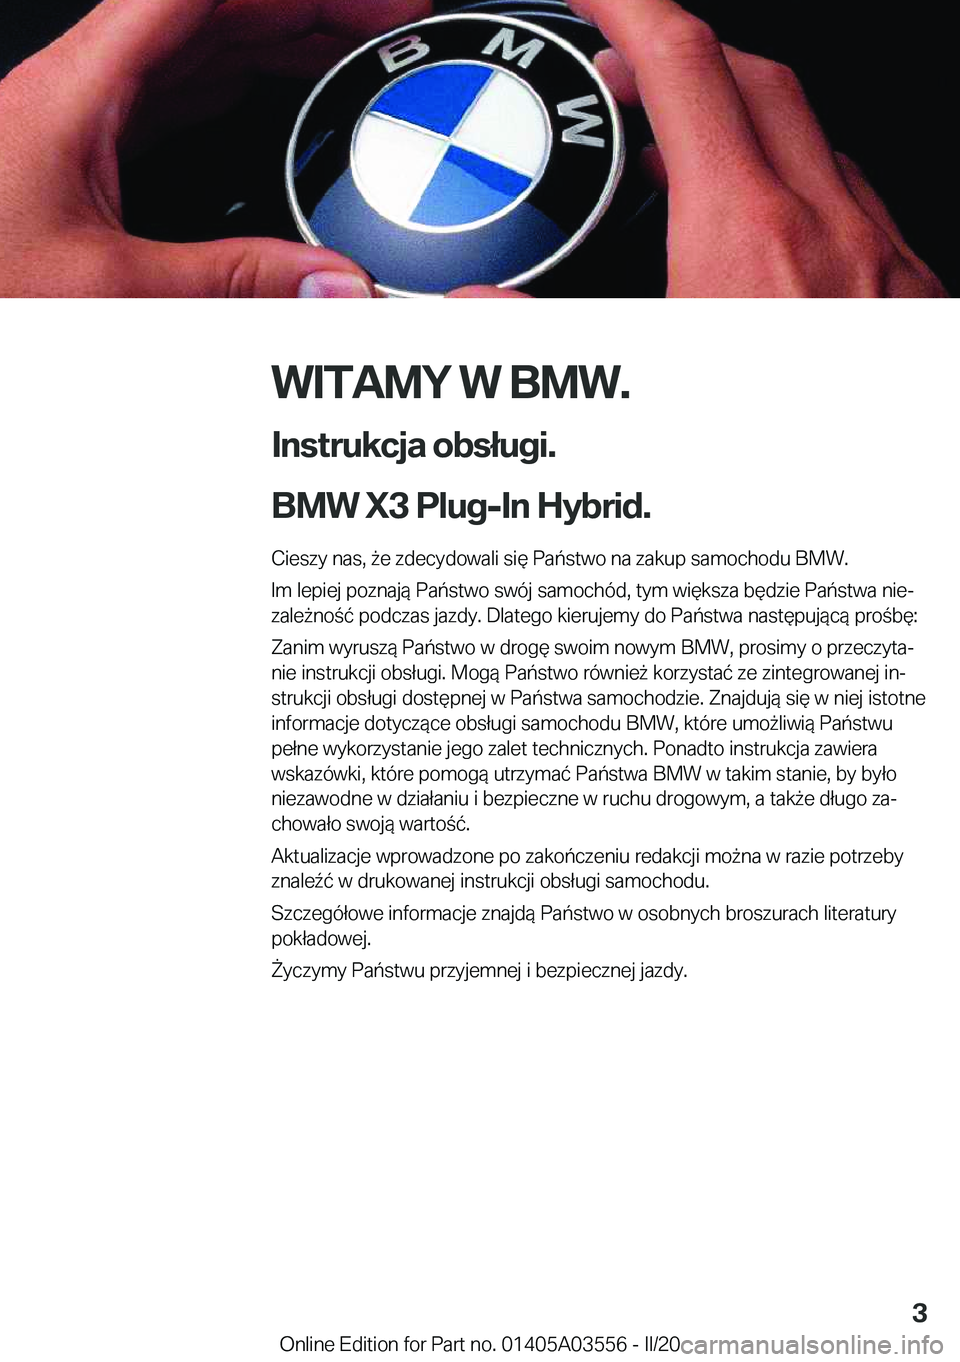 BMW X3 PLUG IN HYBRID 2020  Instrukcja obsługi (in Polish) �W�I�T�A�M�Y��W��B�M�W�.
�I�n�s�t�r�u�k�c�j�a��o�b�s�ł�u�g�i�.
�B�M�W��X�3��P�l�u�g�-�I�n��H�y�b�r�i�d�. �C�i�e�s�z�y��n�a�s�,�9�e��z�d�e�c�y�d�o�w�a�l�i��s�i�